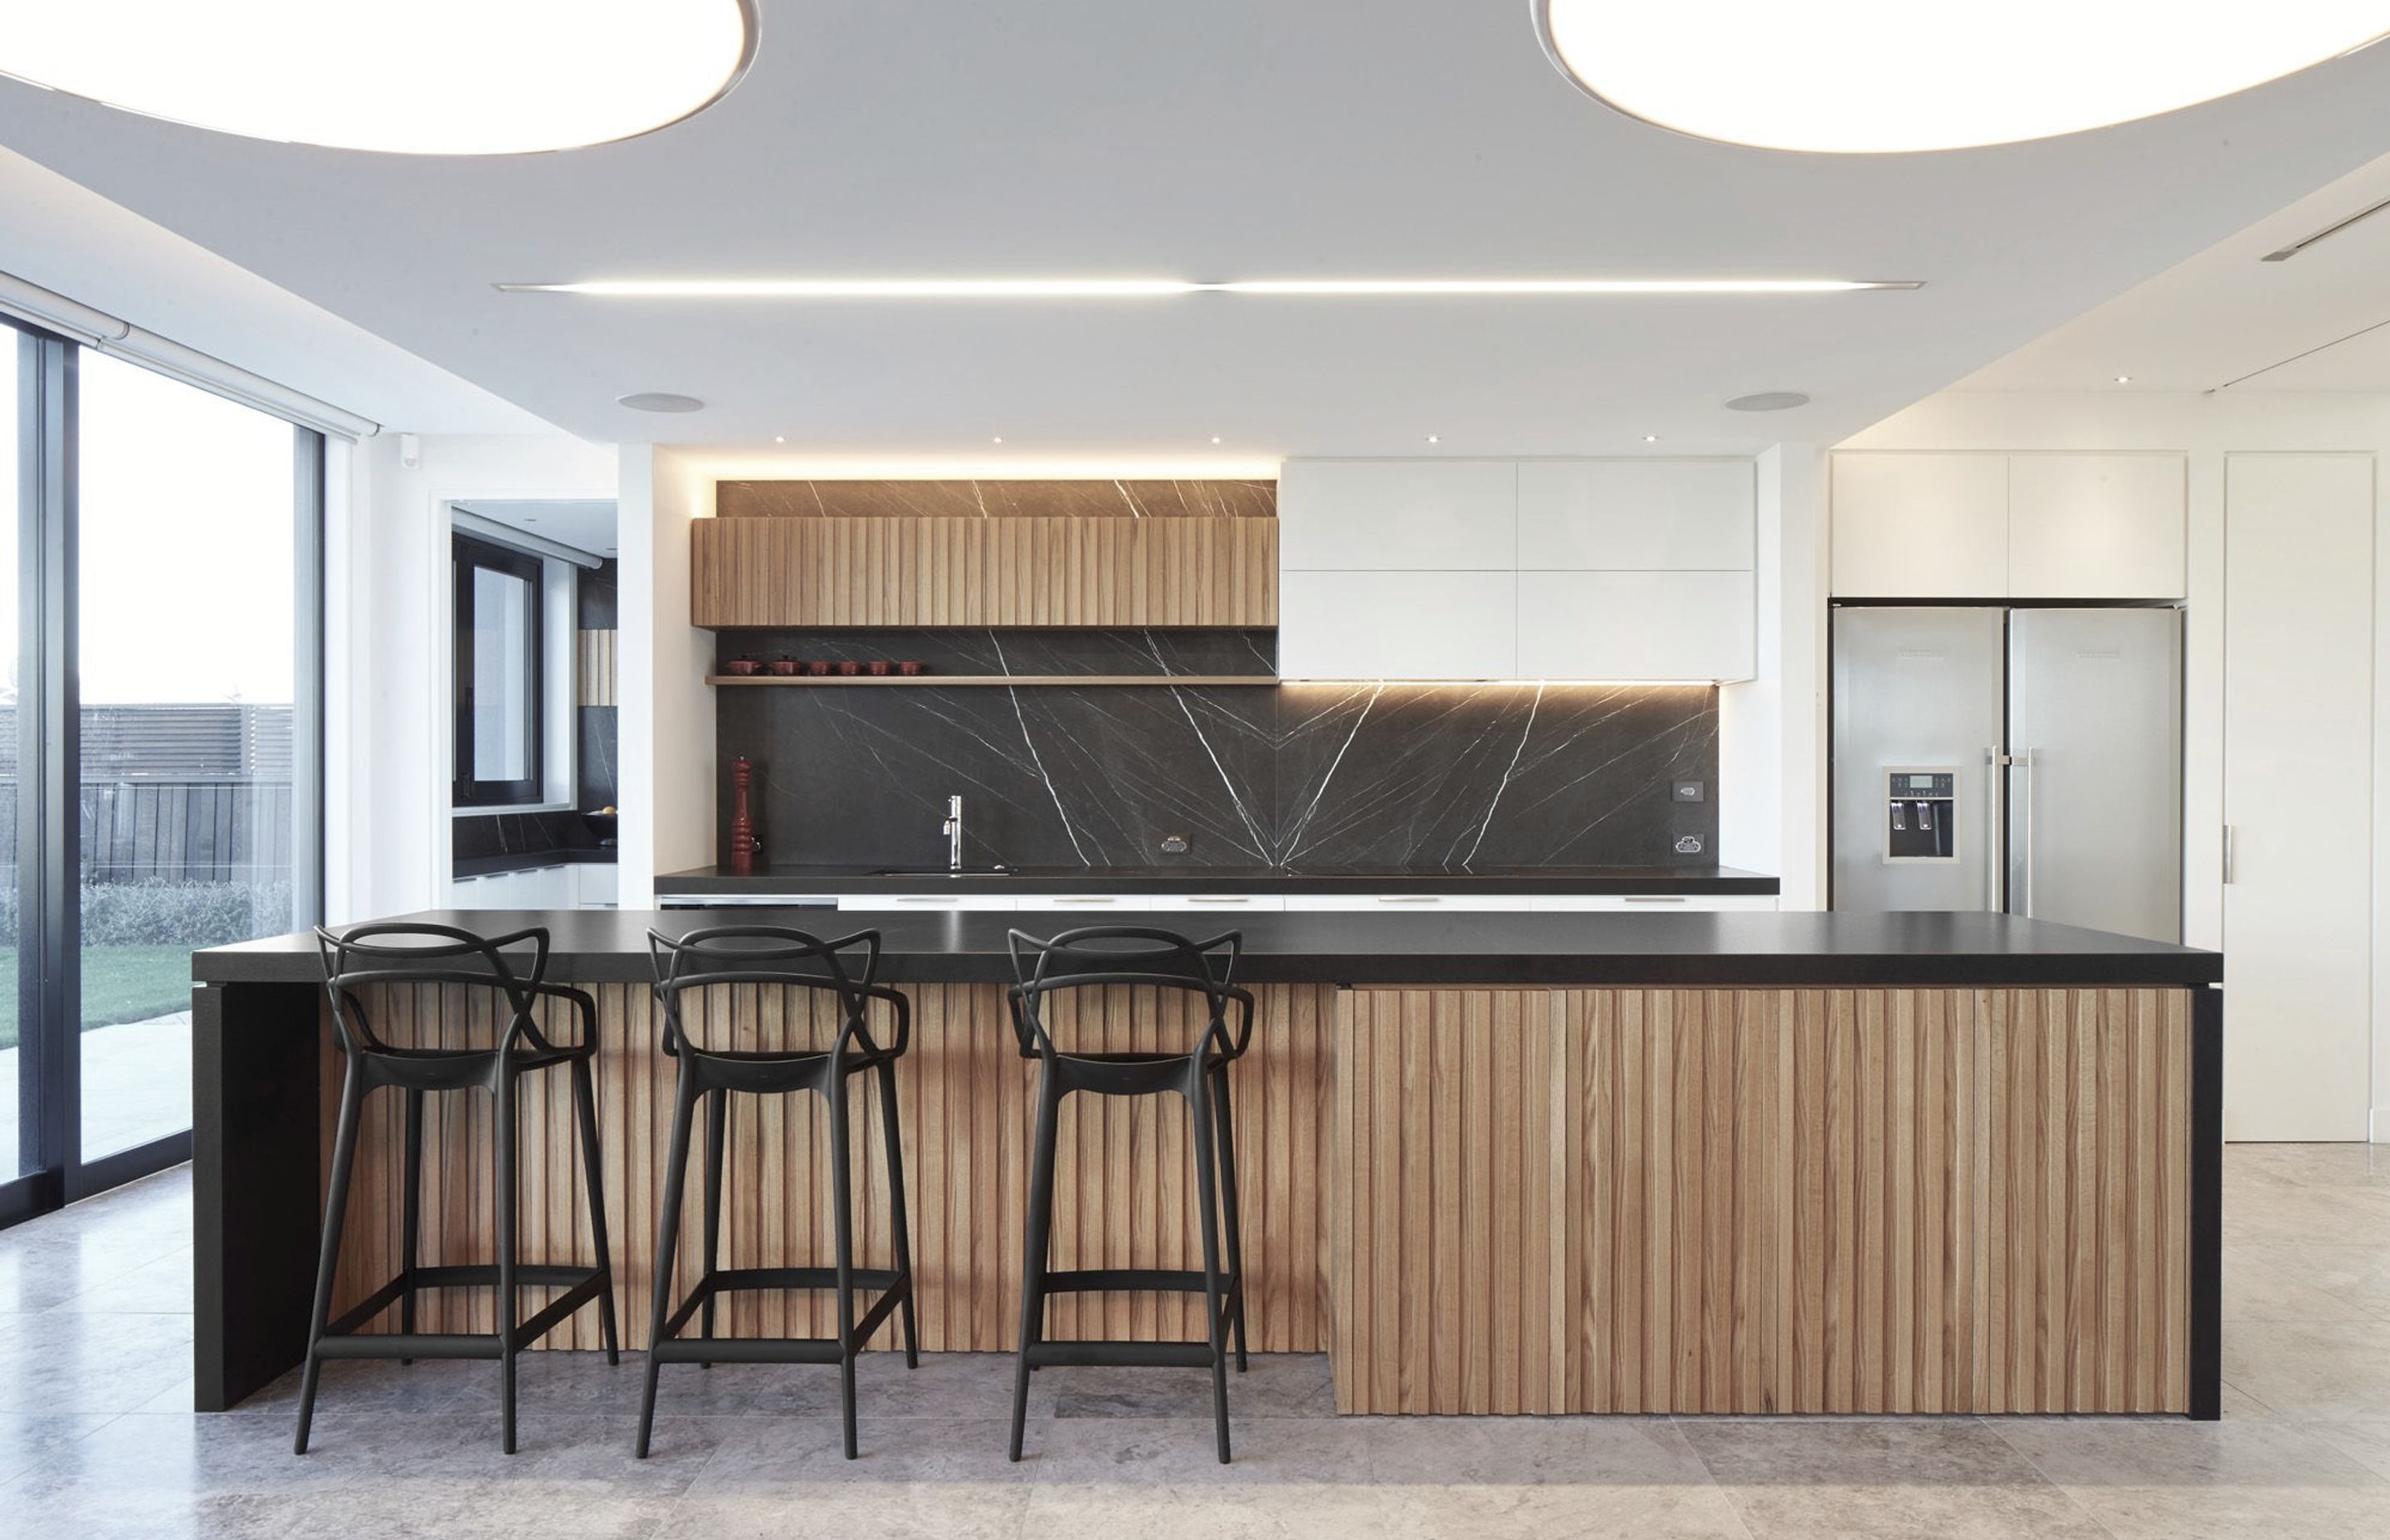 Kitchen and scullery designed by Ingrid Geldof Design